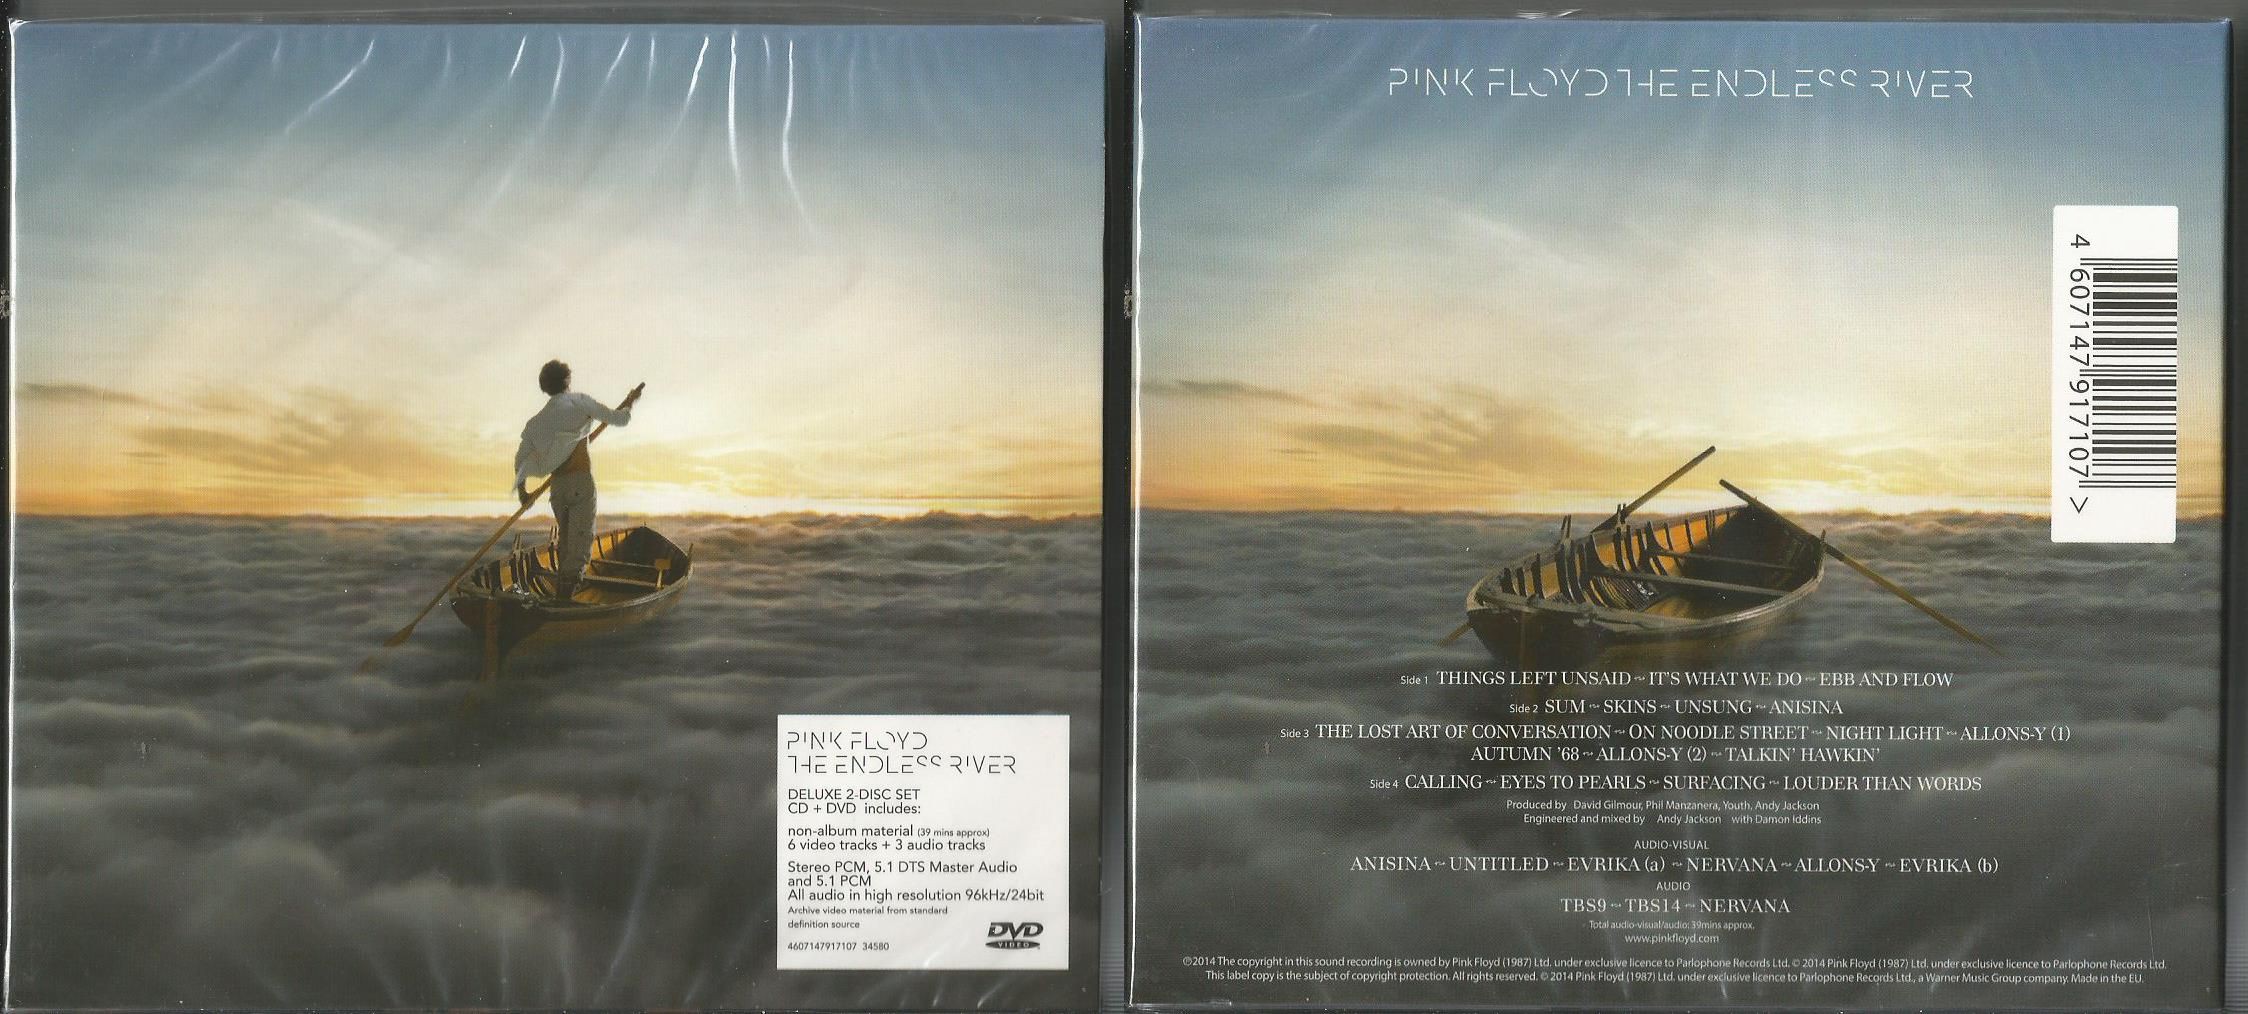 The endless river. Pink Floyd the endless River 2014. Pink Floyd the endless River обложка. Pink Floyd endless River Japan CD. Пинк Флойд бесконечная река.